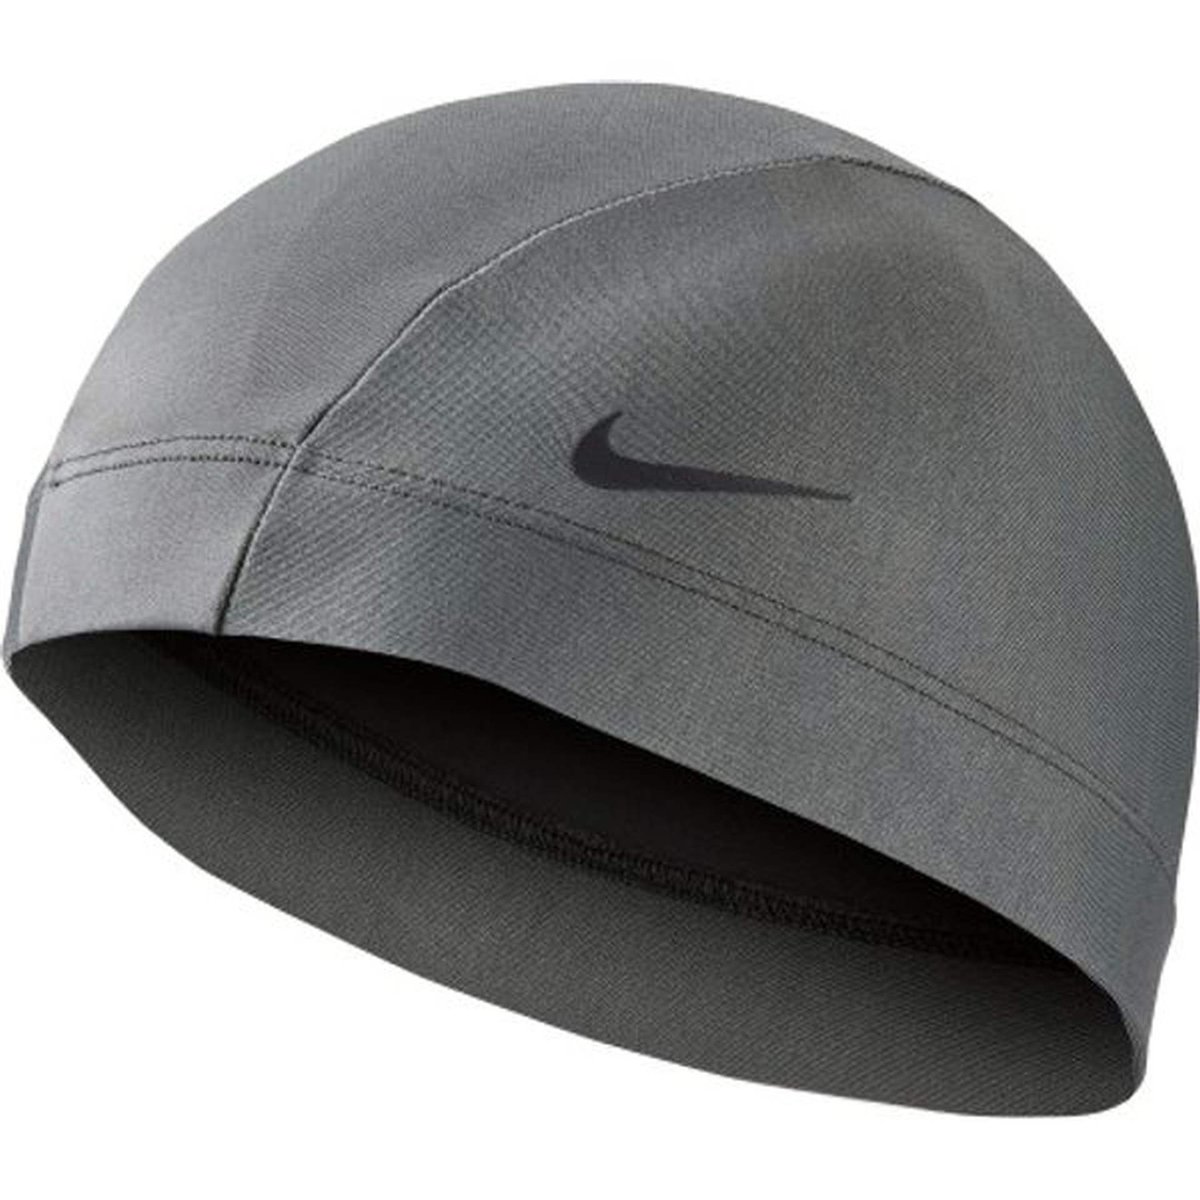 Czepek Pływacki Nike Comfort Cap Iron Grey